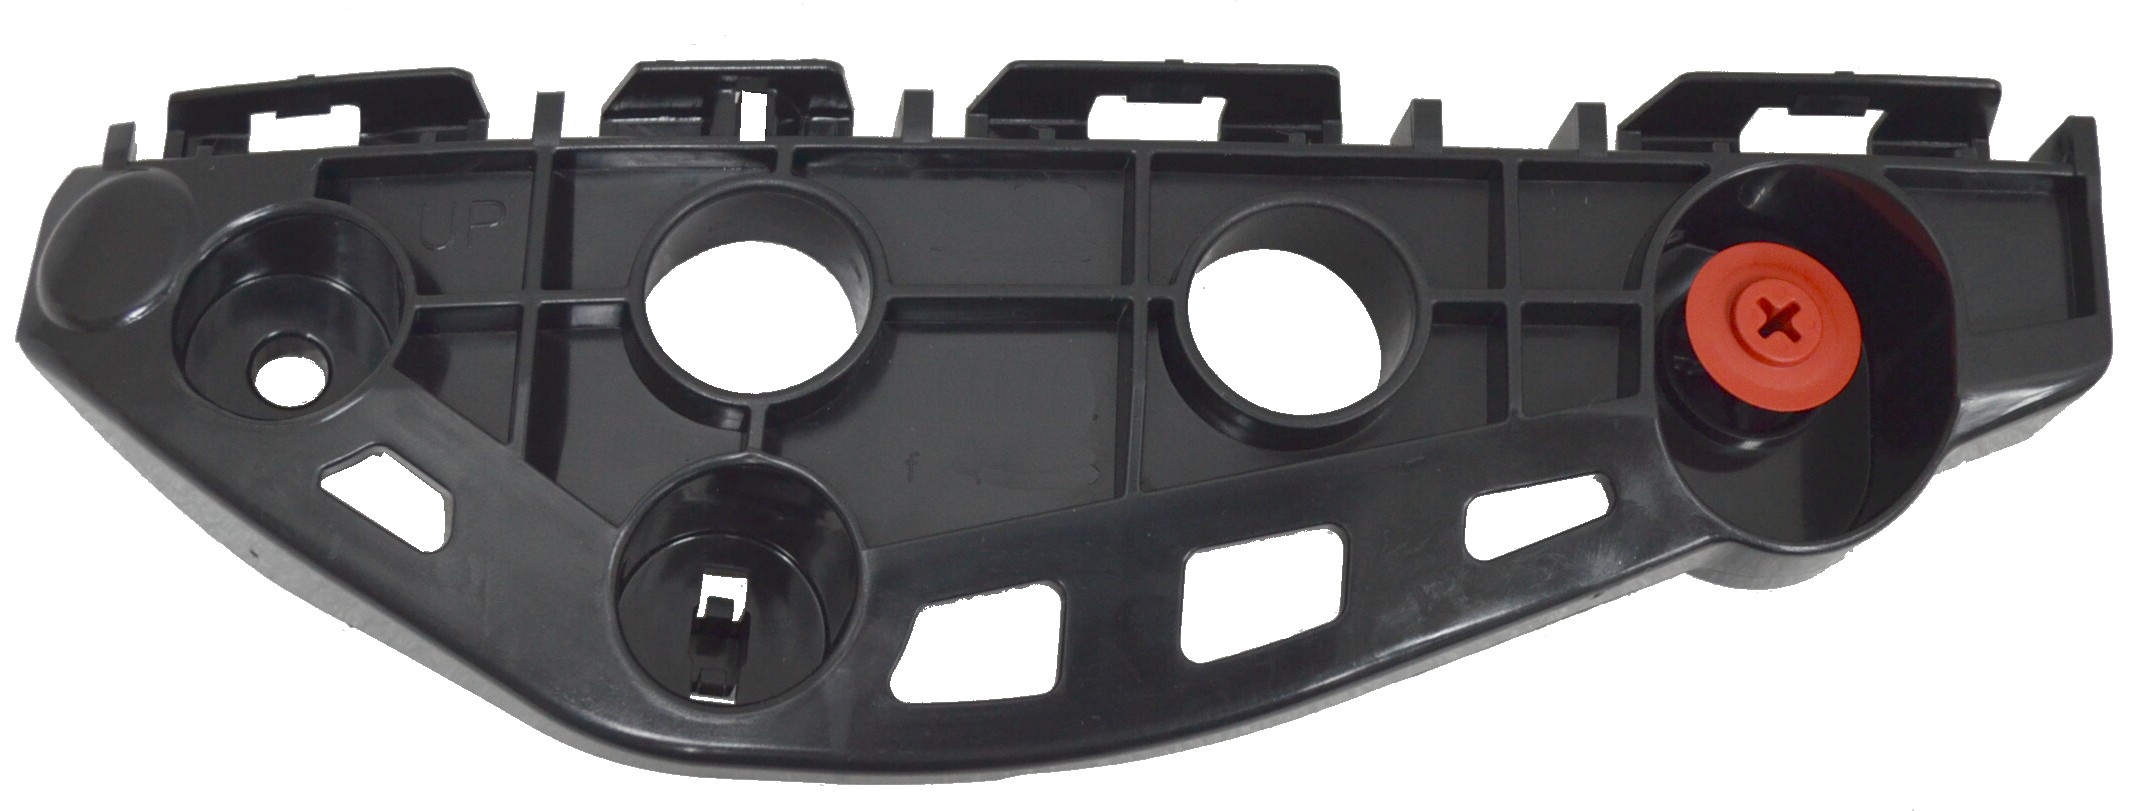 Aftermarket BRACKETS for LEXUS - RX450H, RX450h,13-15,LT Front bumper cover retainer